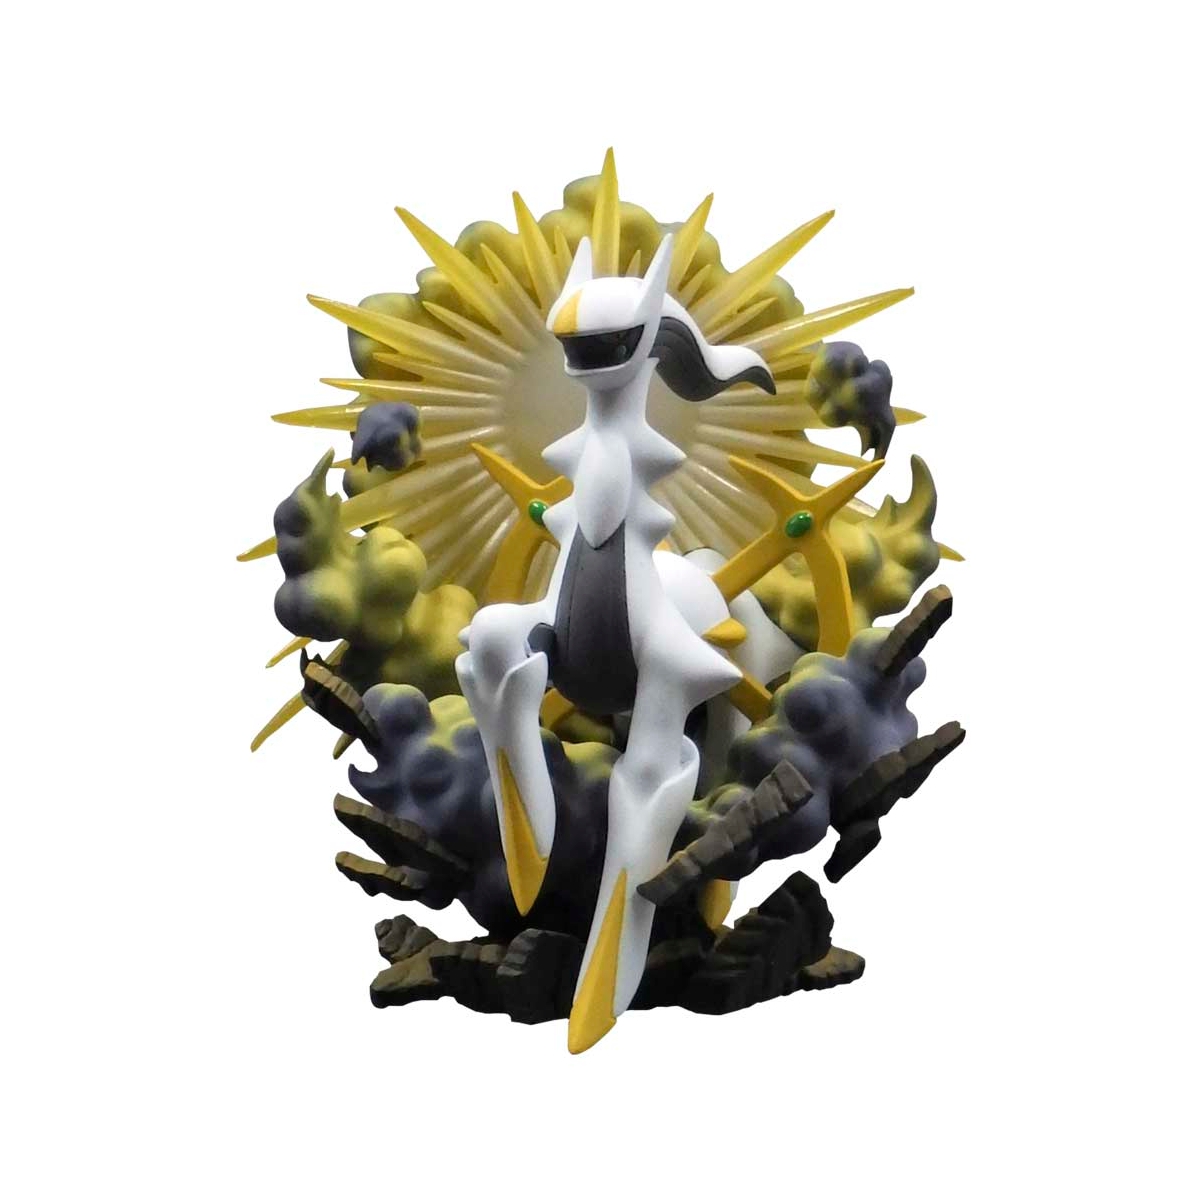 Pokémon - Arceus V Figure Collection